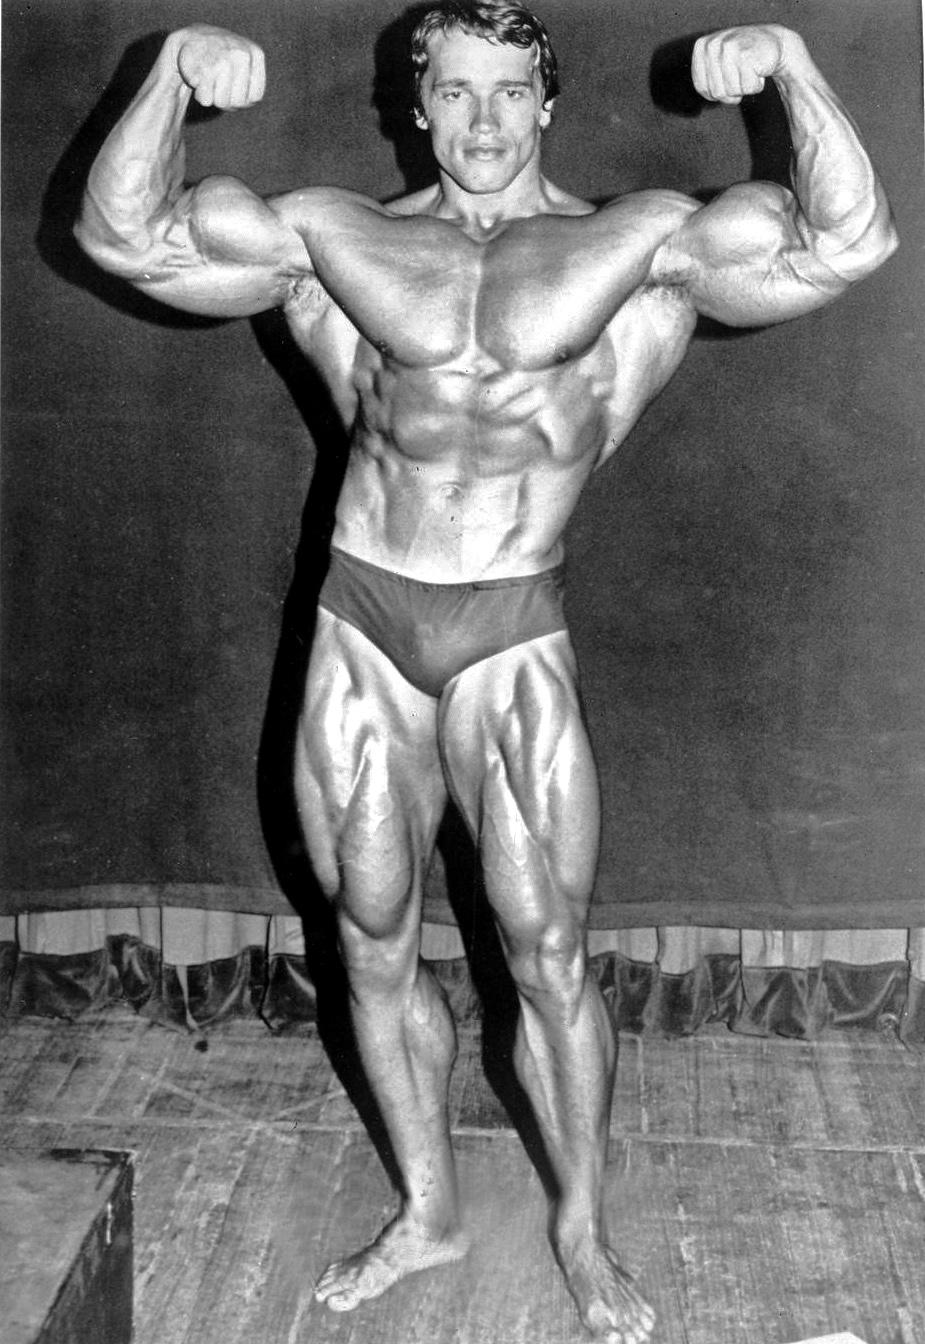 From Bodybuilding Champion to Education Advocate: Arnold Schwarzenegger’s Inspiring Journey